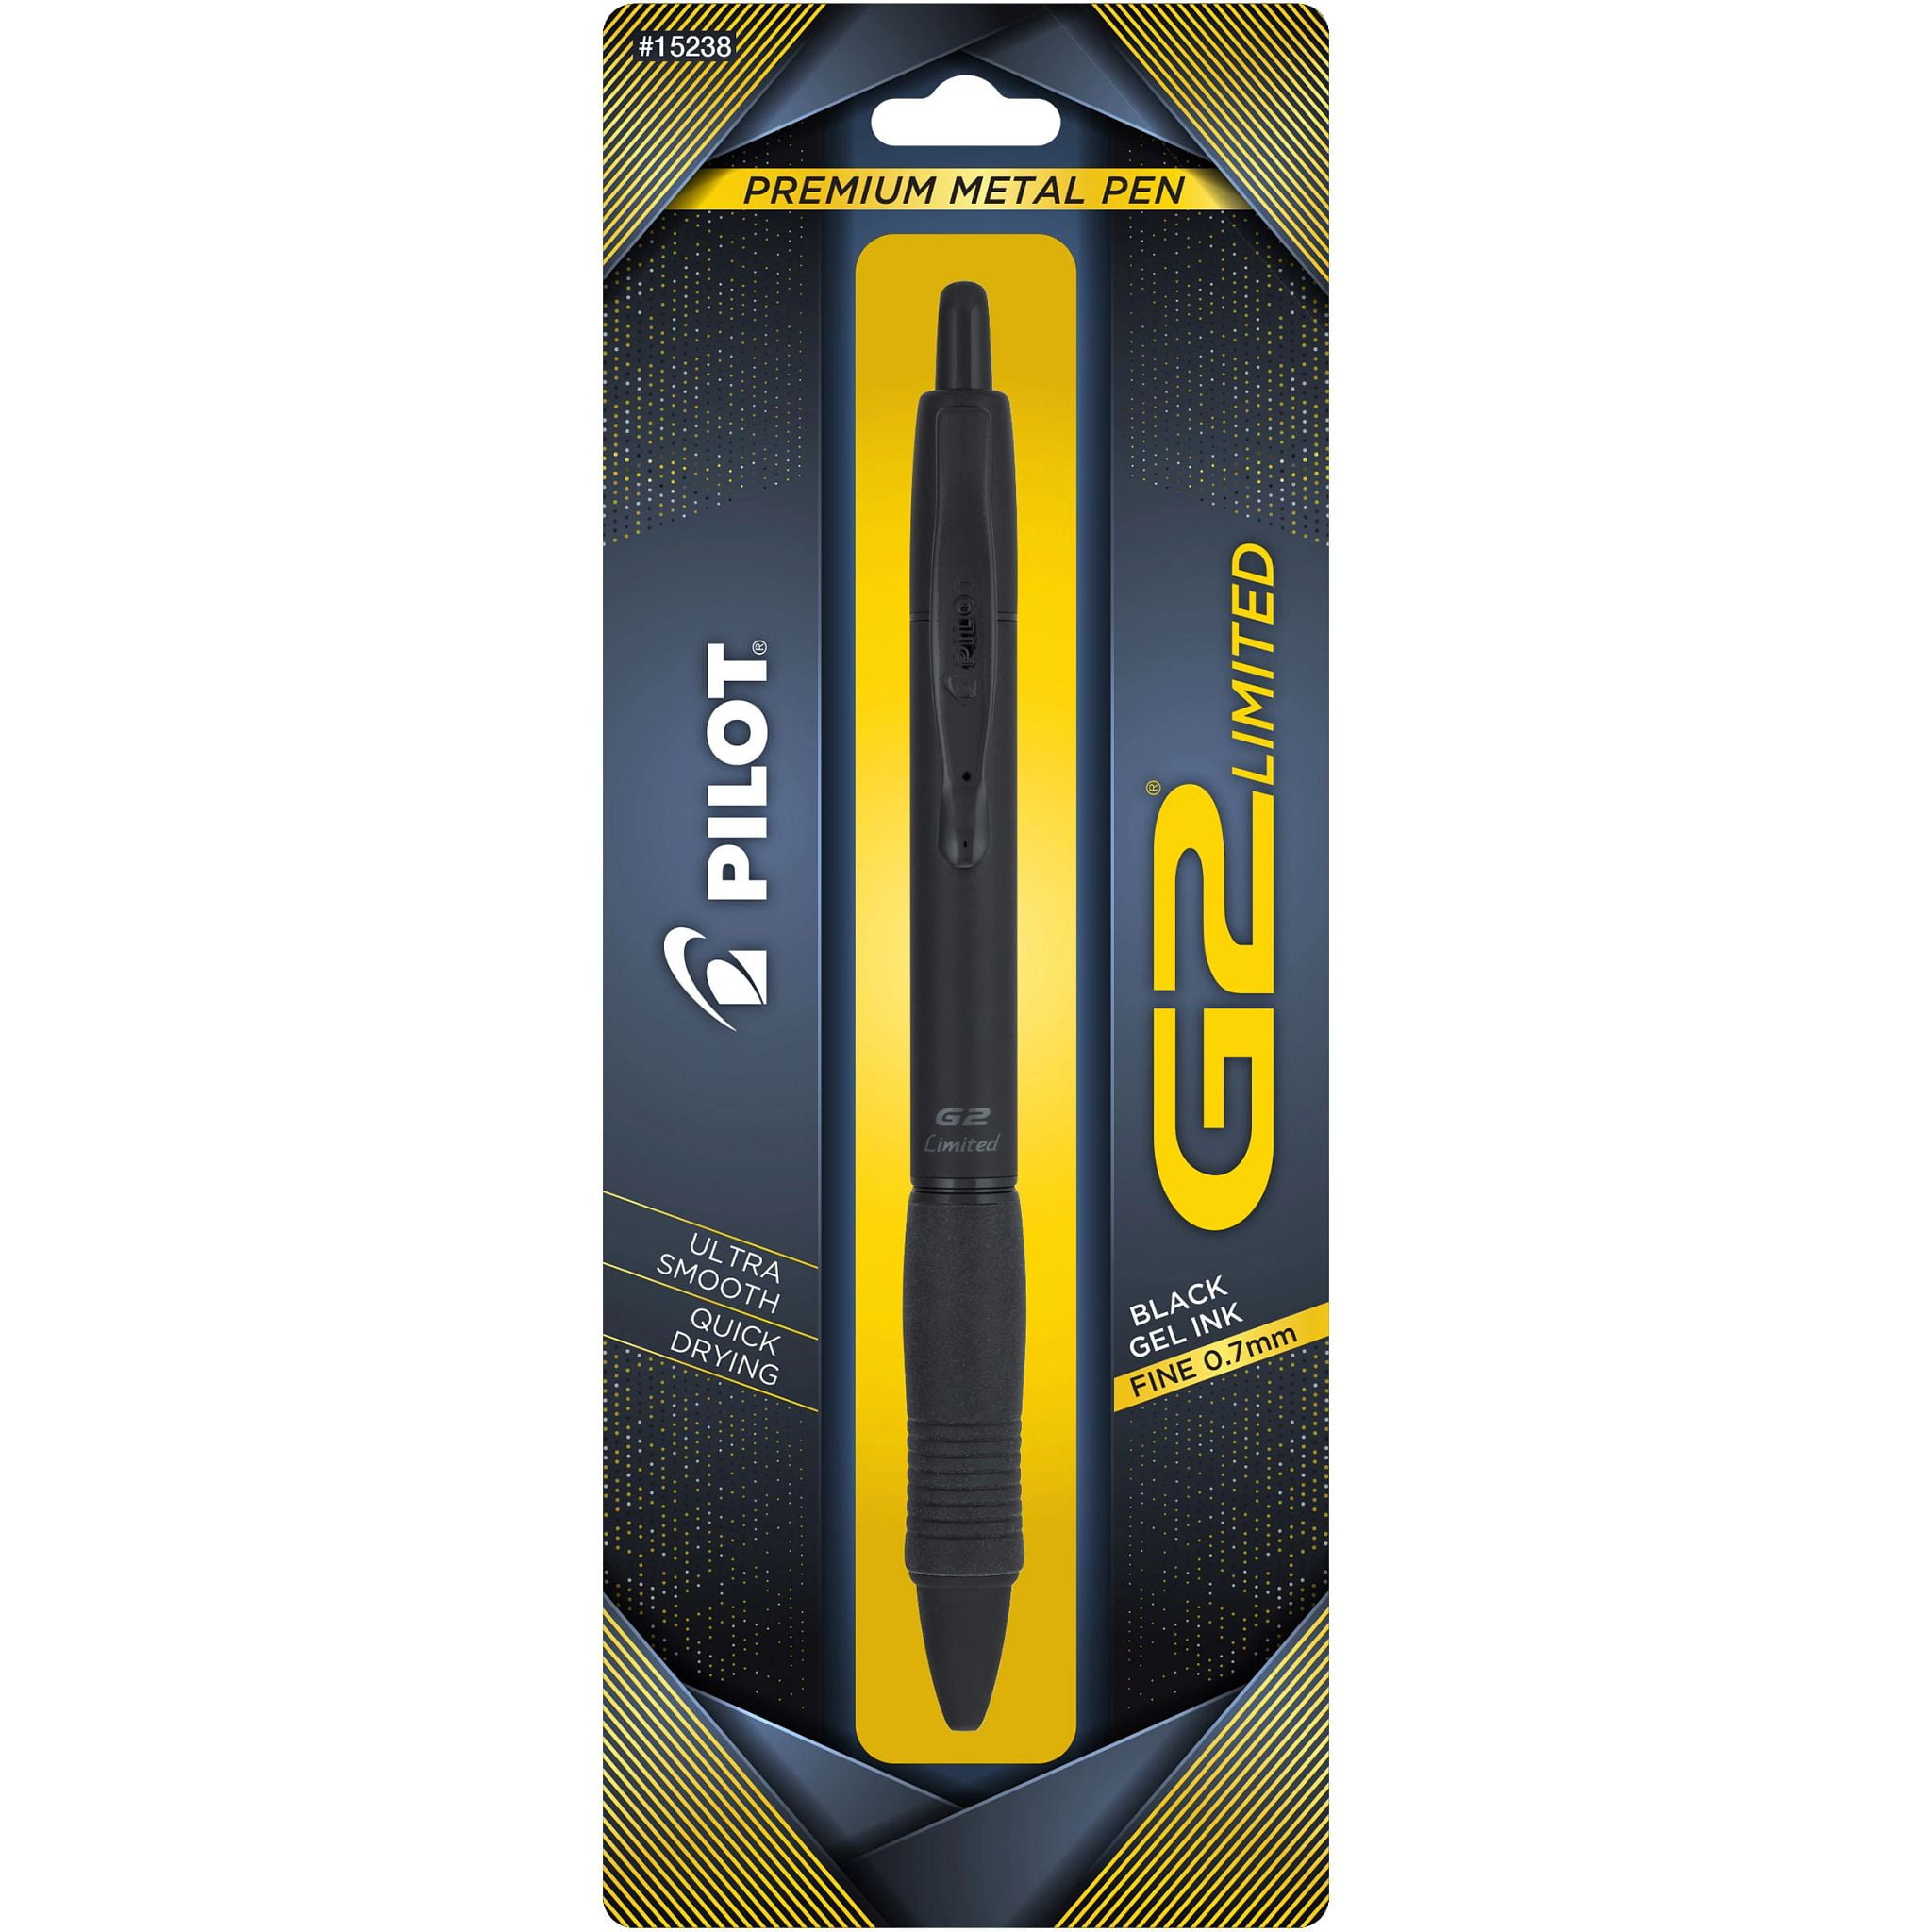 PILOT G2 Premium Fine Point Gel Ink Pen, 0.7 mm, Algeria